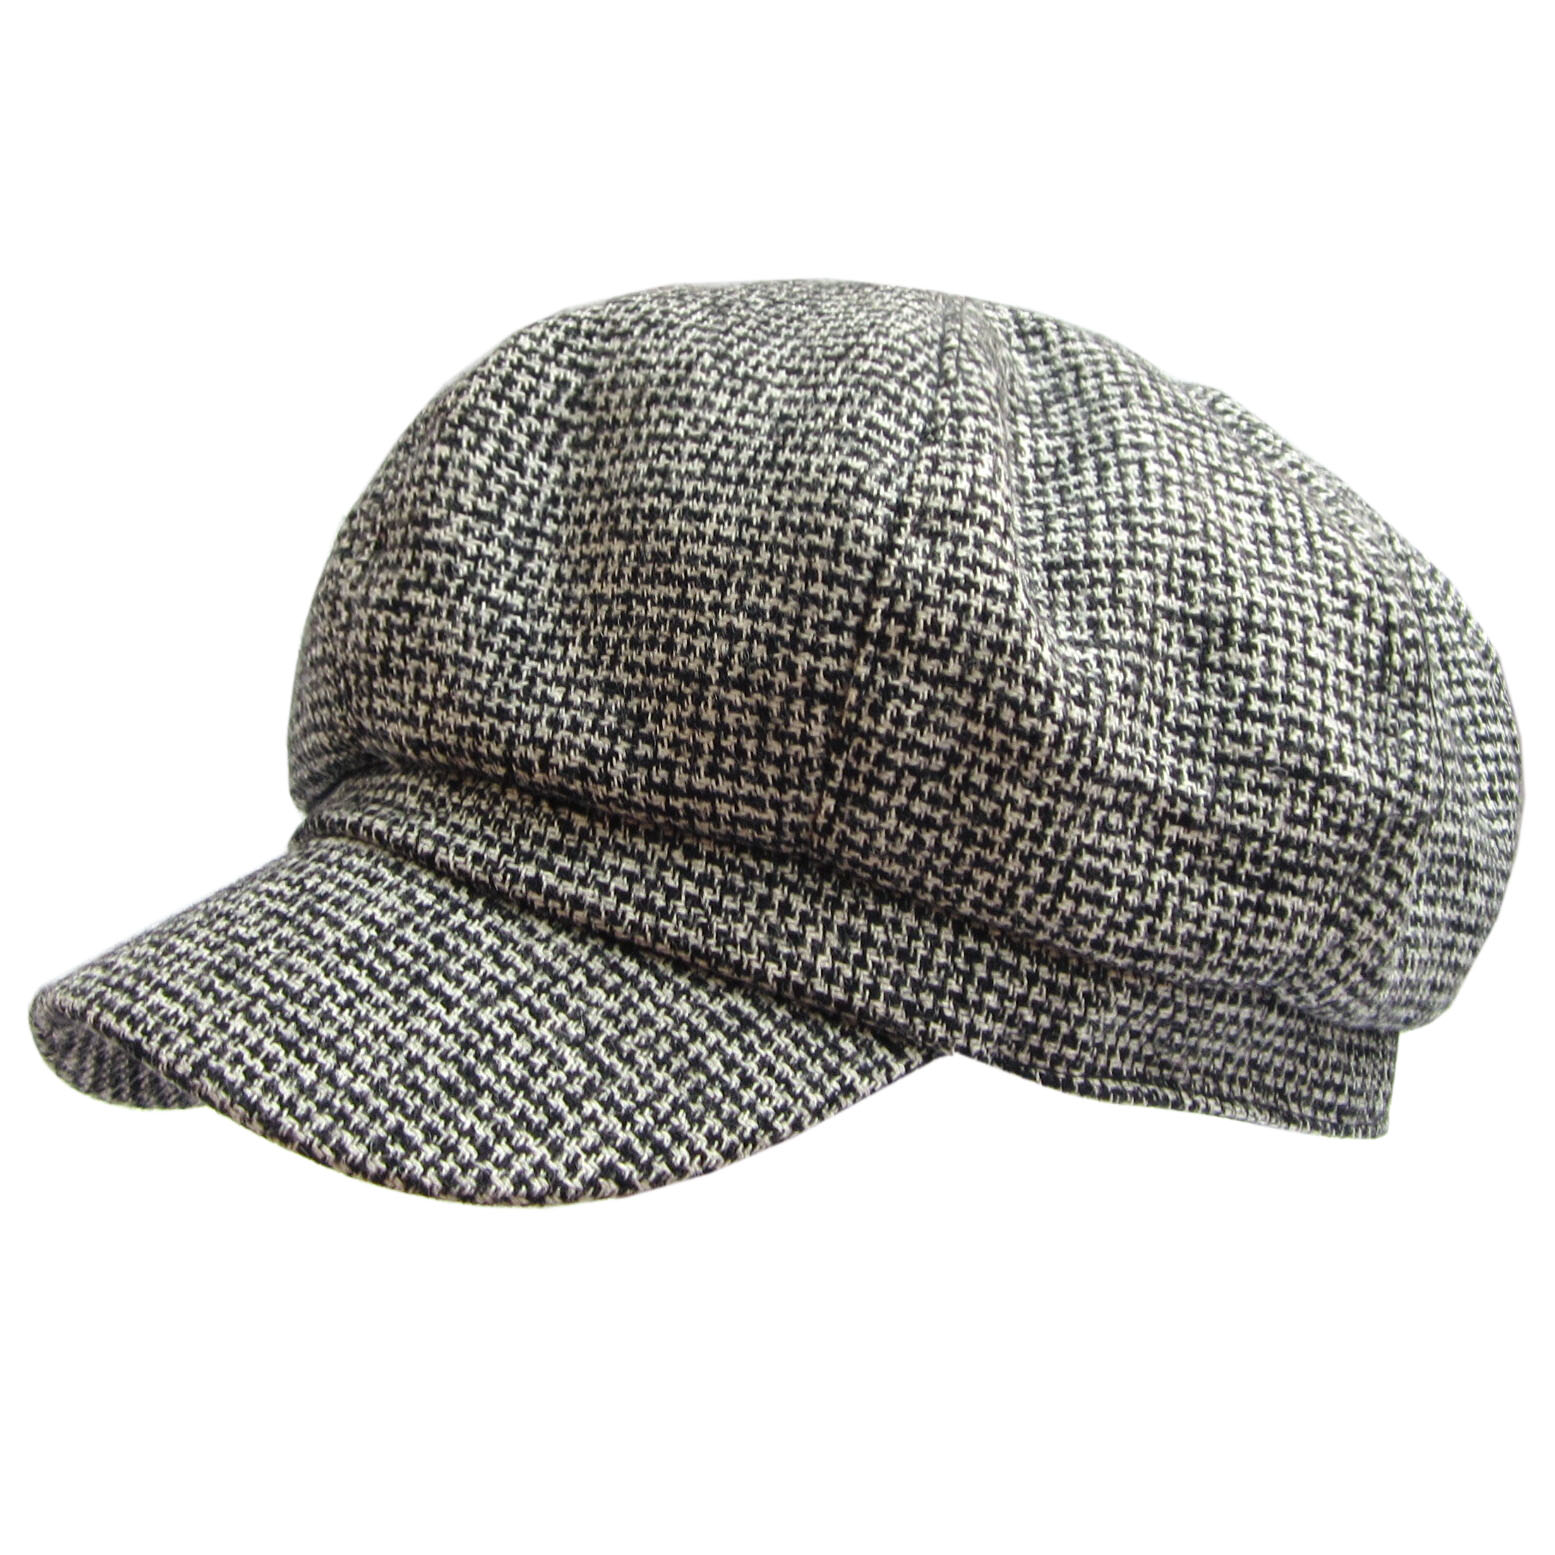 J010wa male women's autumn and winter fashion newsboy cap painter cap houndstooth octagonal hat